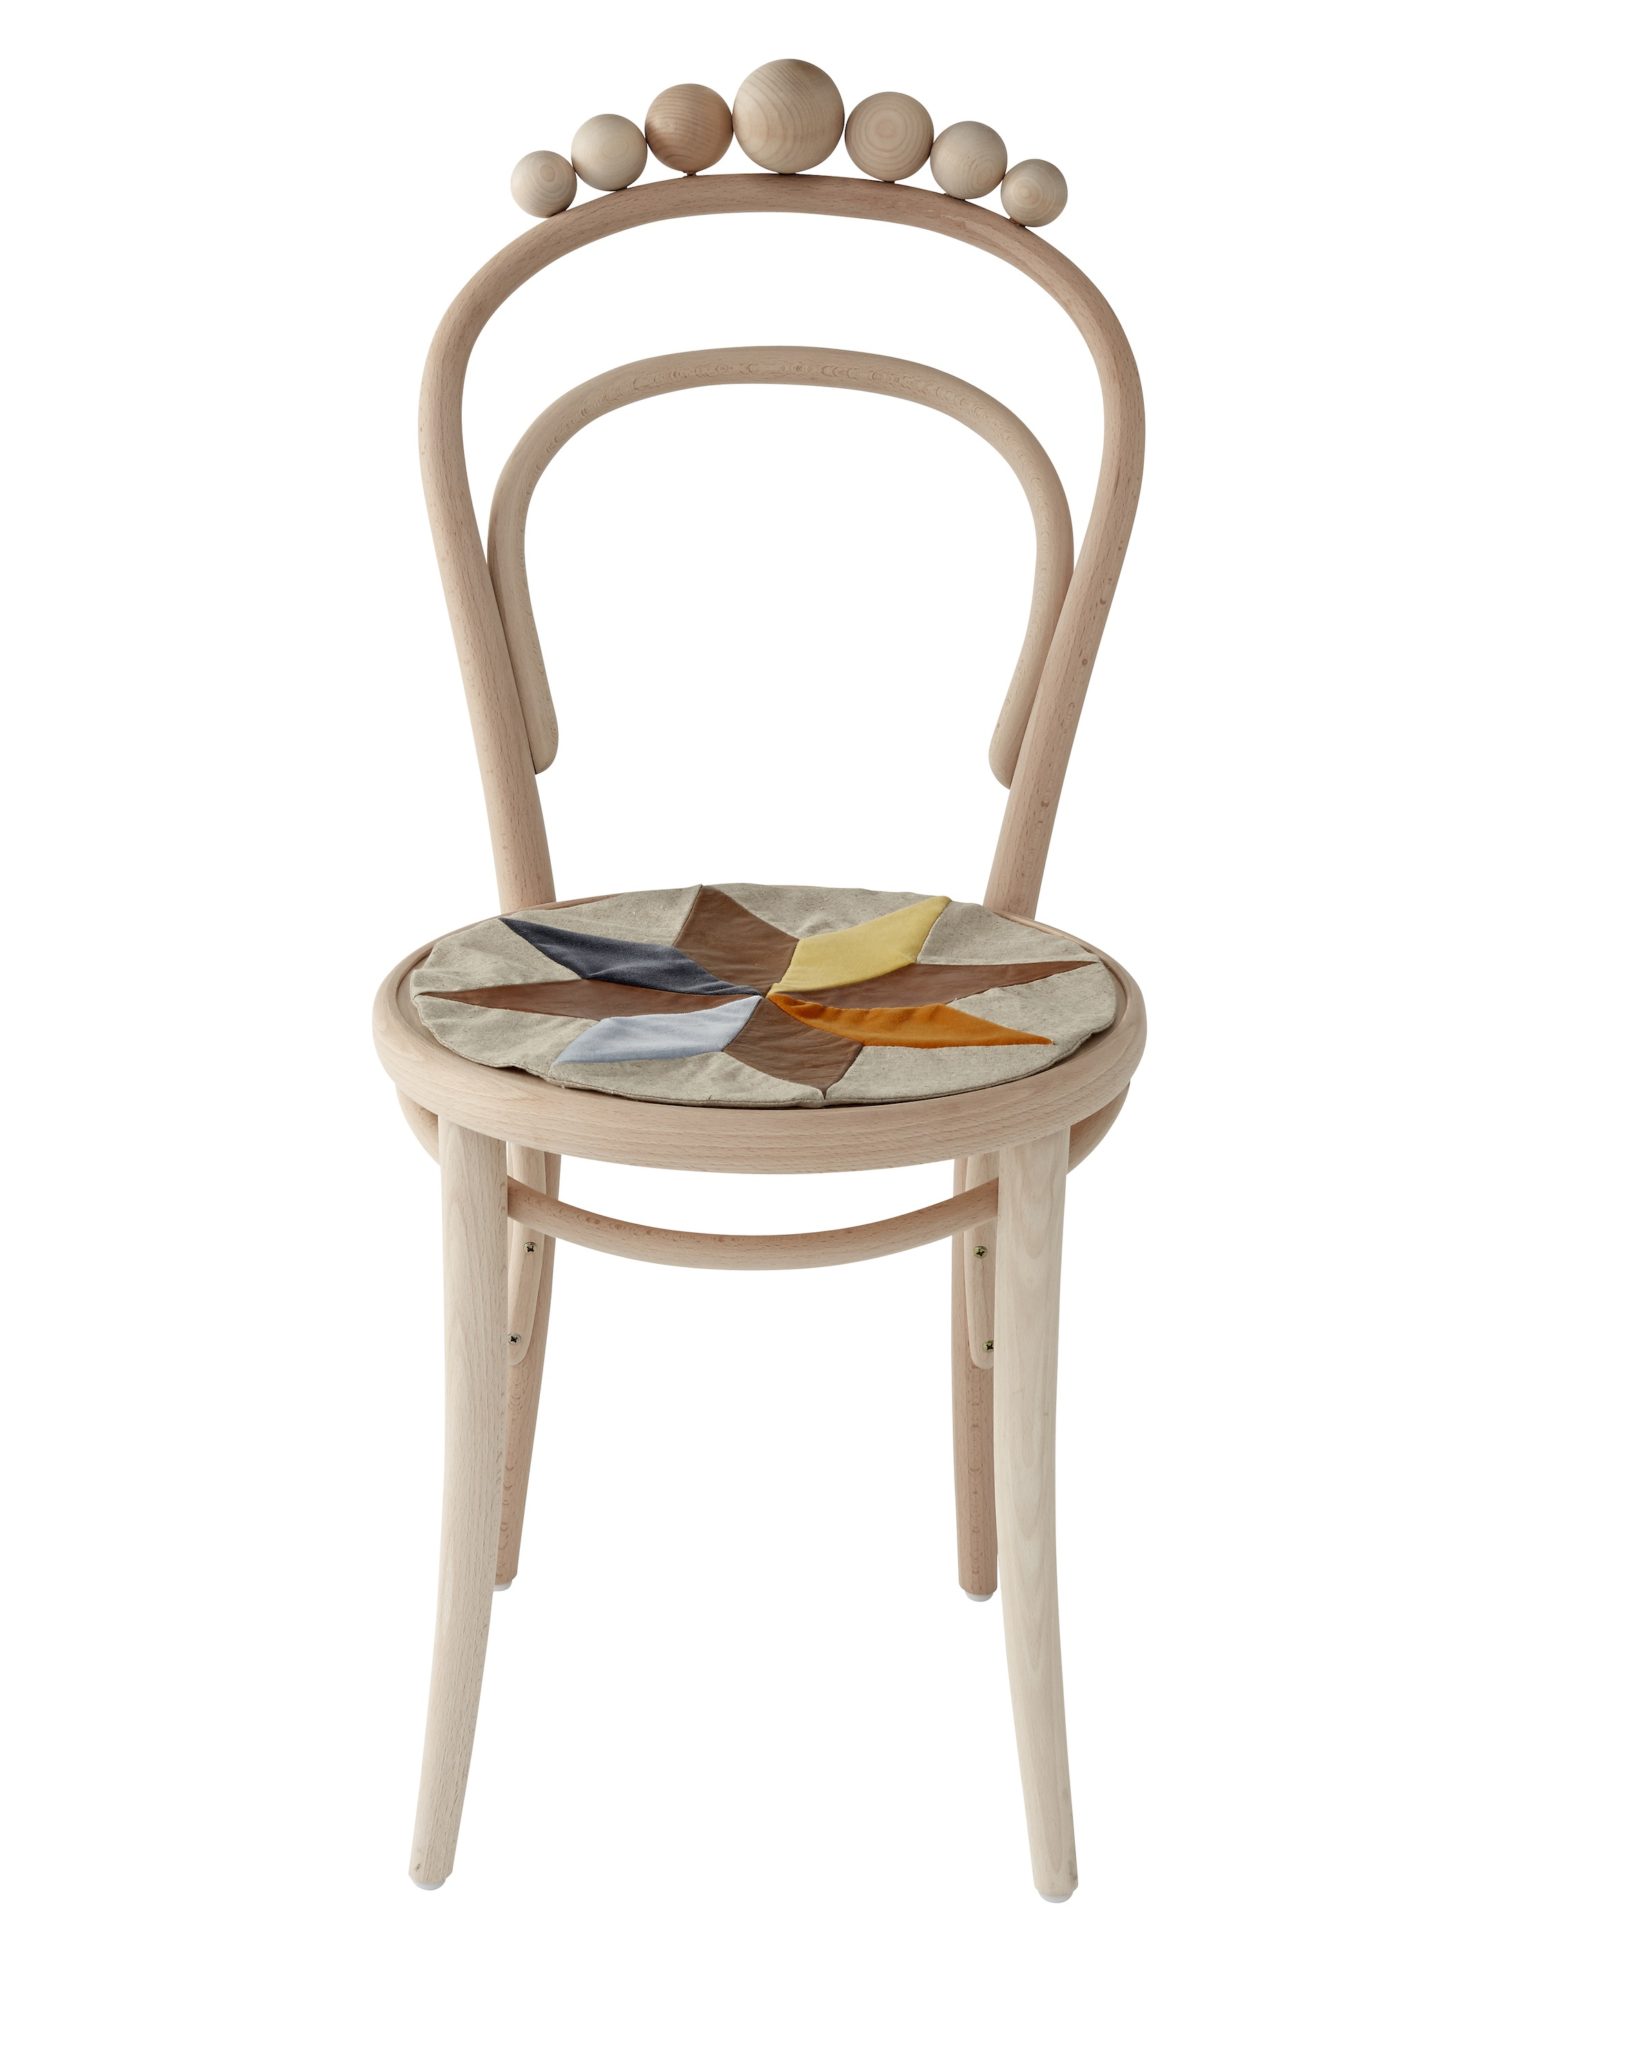 Chair by craft queen Tamara Maynes